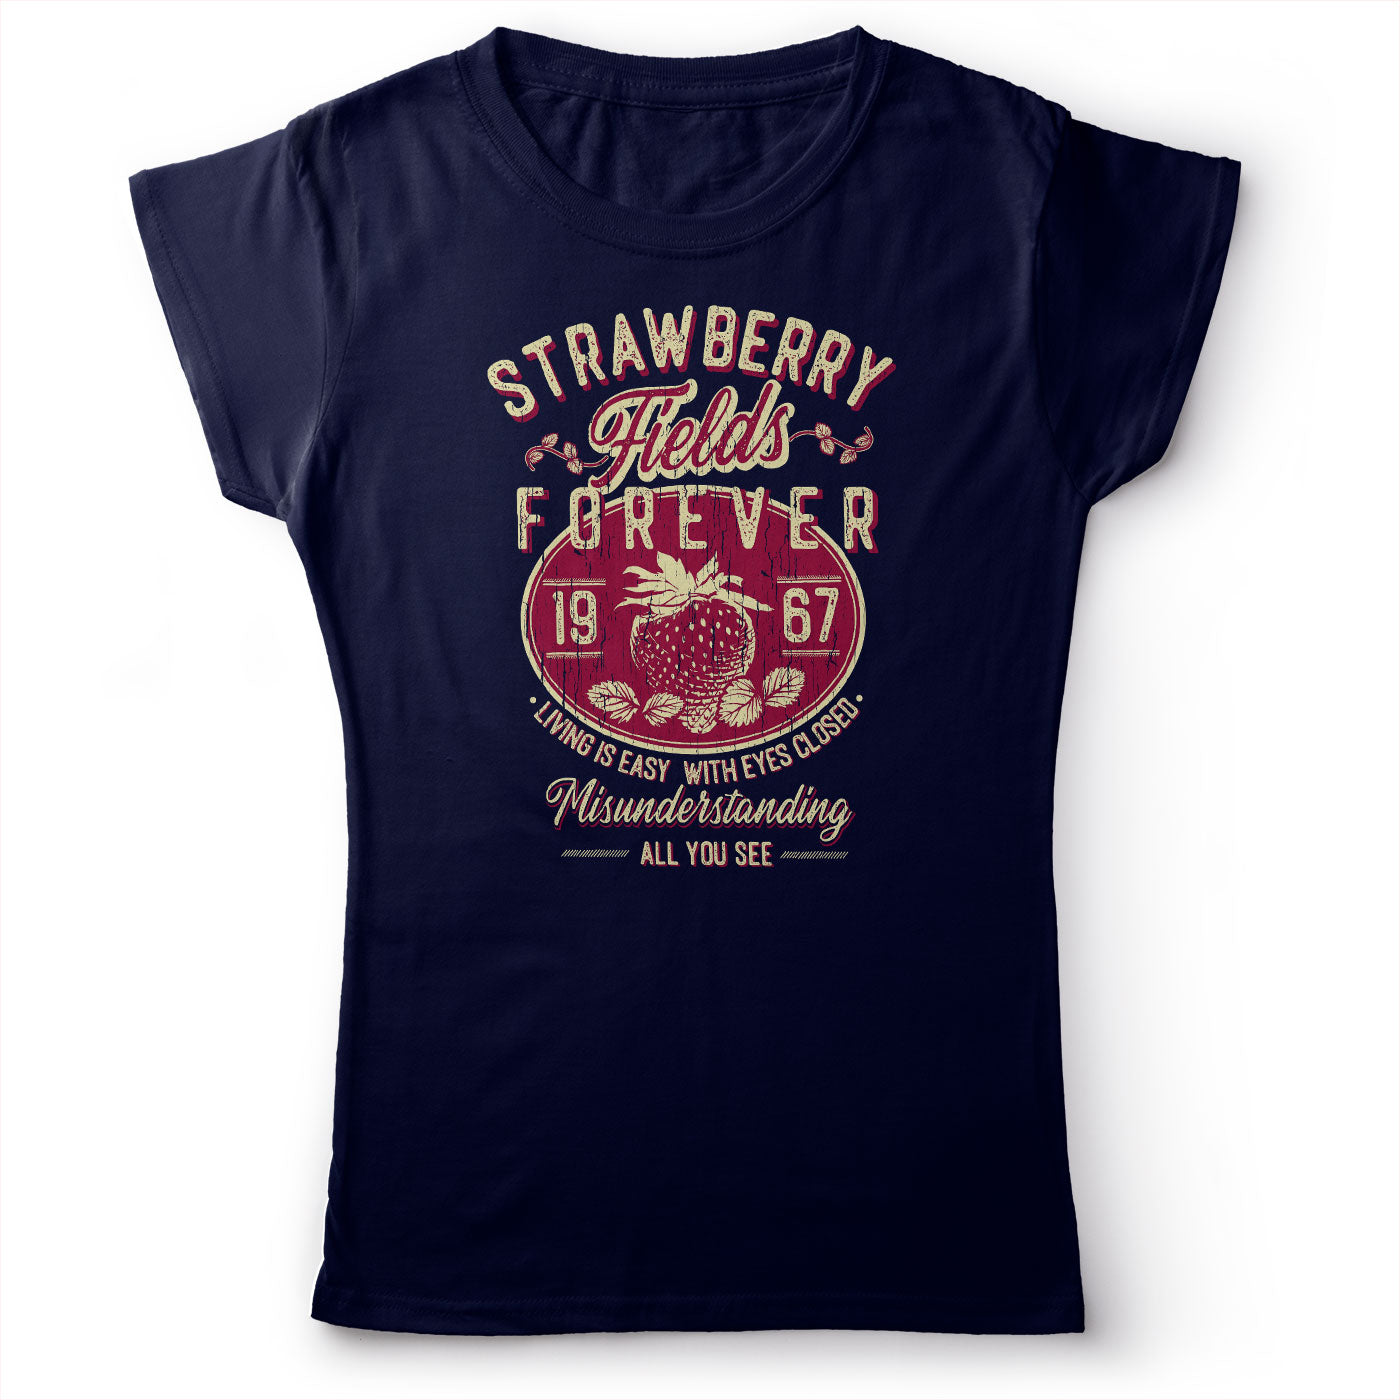 The Beatles - Strawberry Fields Forever - Women's T-Shirt Navy Blue 2